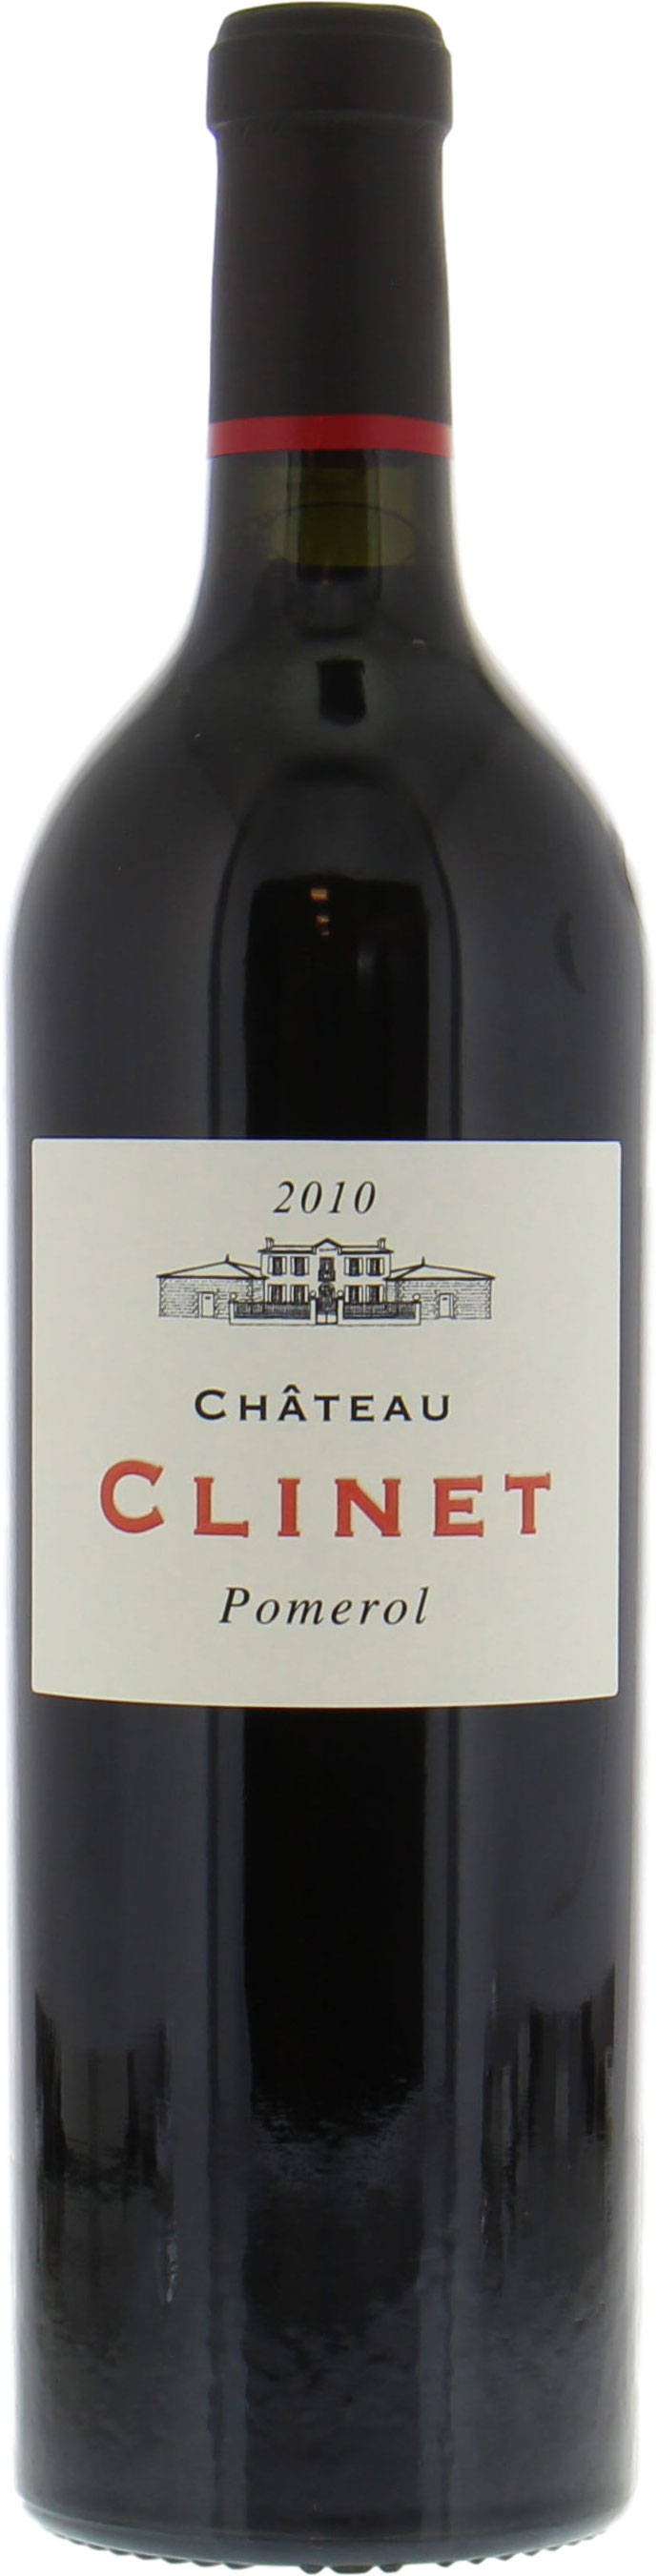 Chateau Clinet - Chateau Clinet 2010